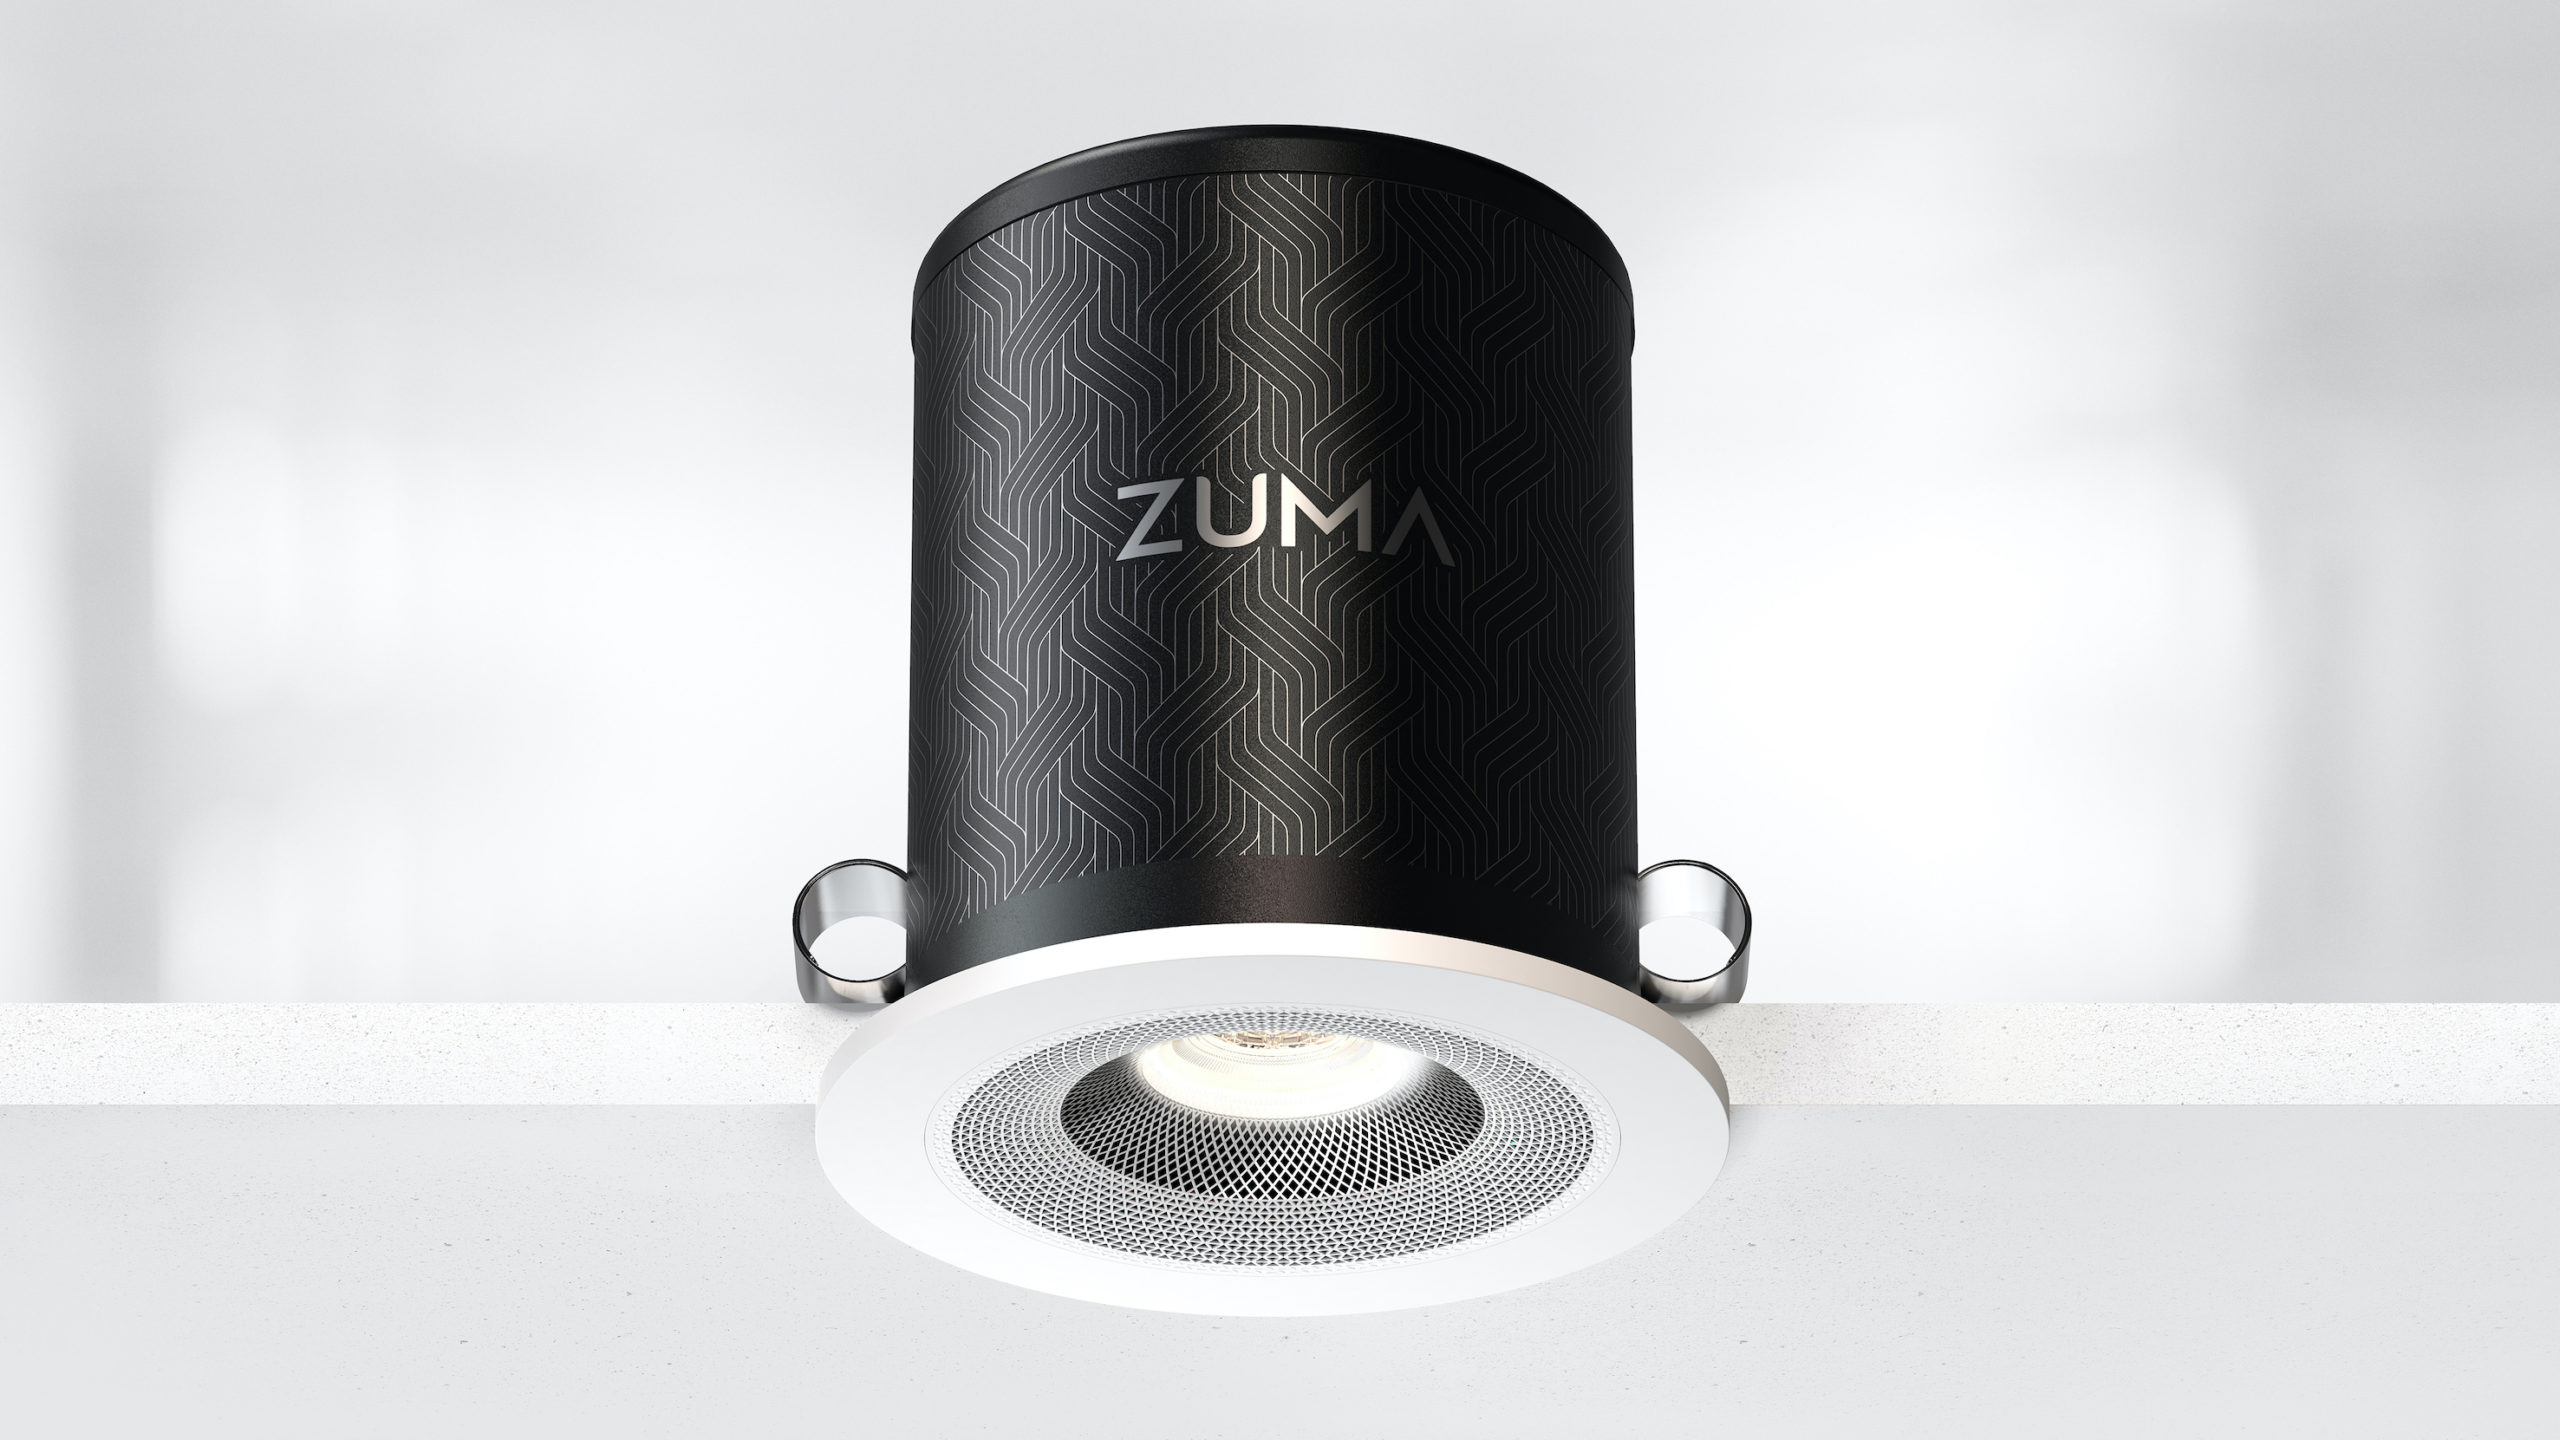 zuma-lumisonic:-an-ultra-compact-speaker-light-from-the-engineer-of-b&w’s-nautilus